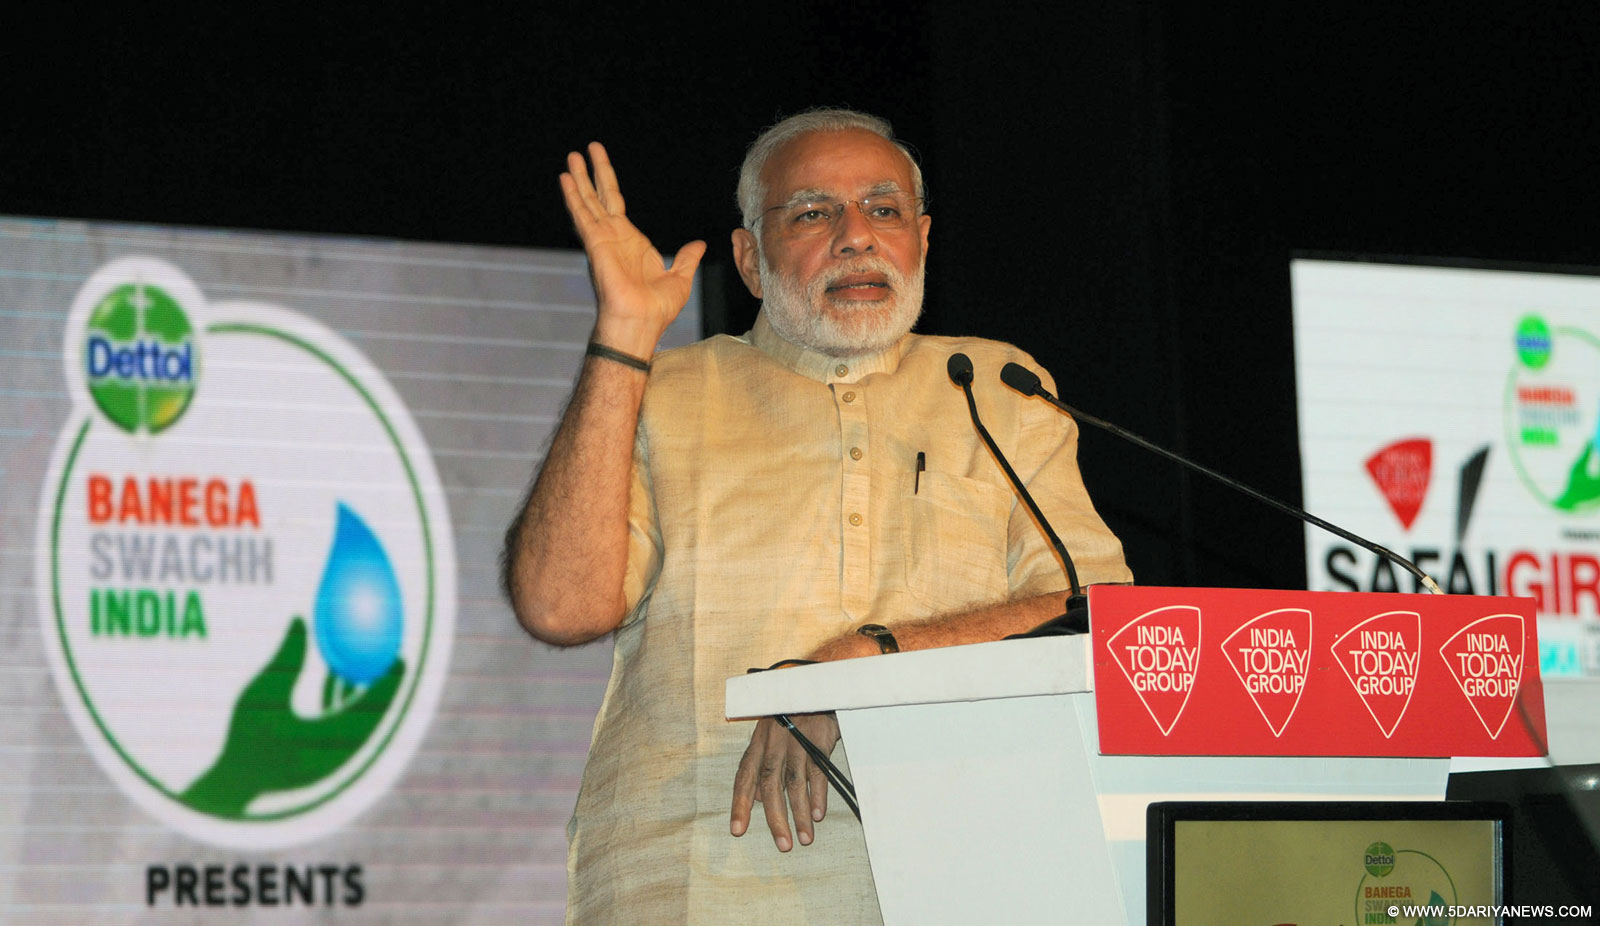 The Prime Minister, Shri Narendra Modi addressing the gathering at the Safaigiri Summit & Awards 2015, in New Delhi on October 02, 2015.